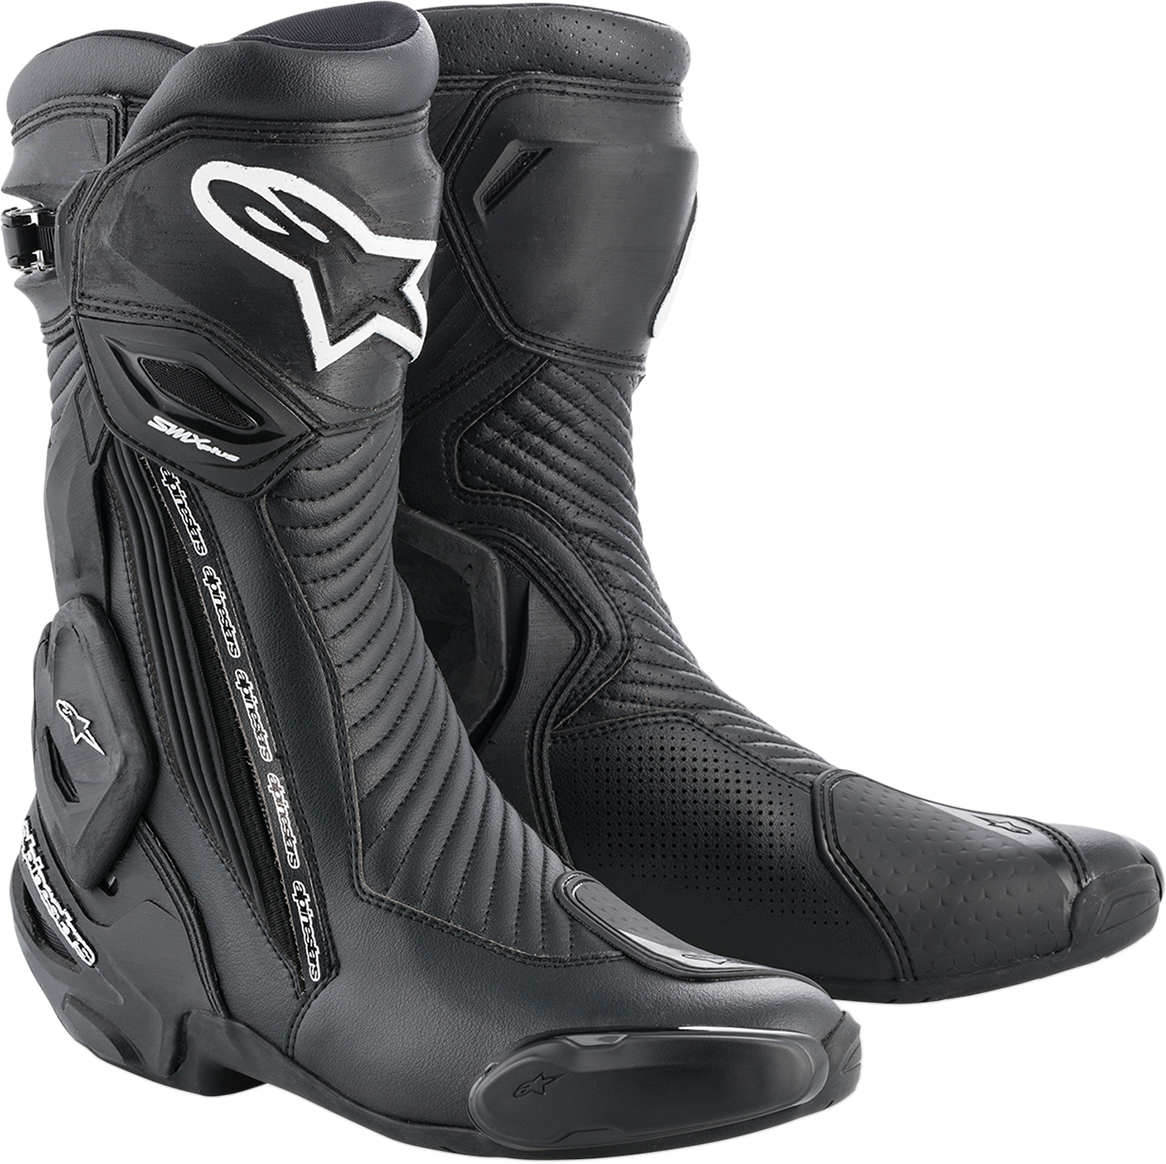 ALPINESTARS SMX+ Boots - Black - US 12.5 / EU 48 2221019-10-48